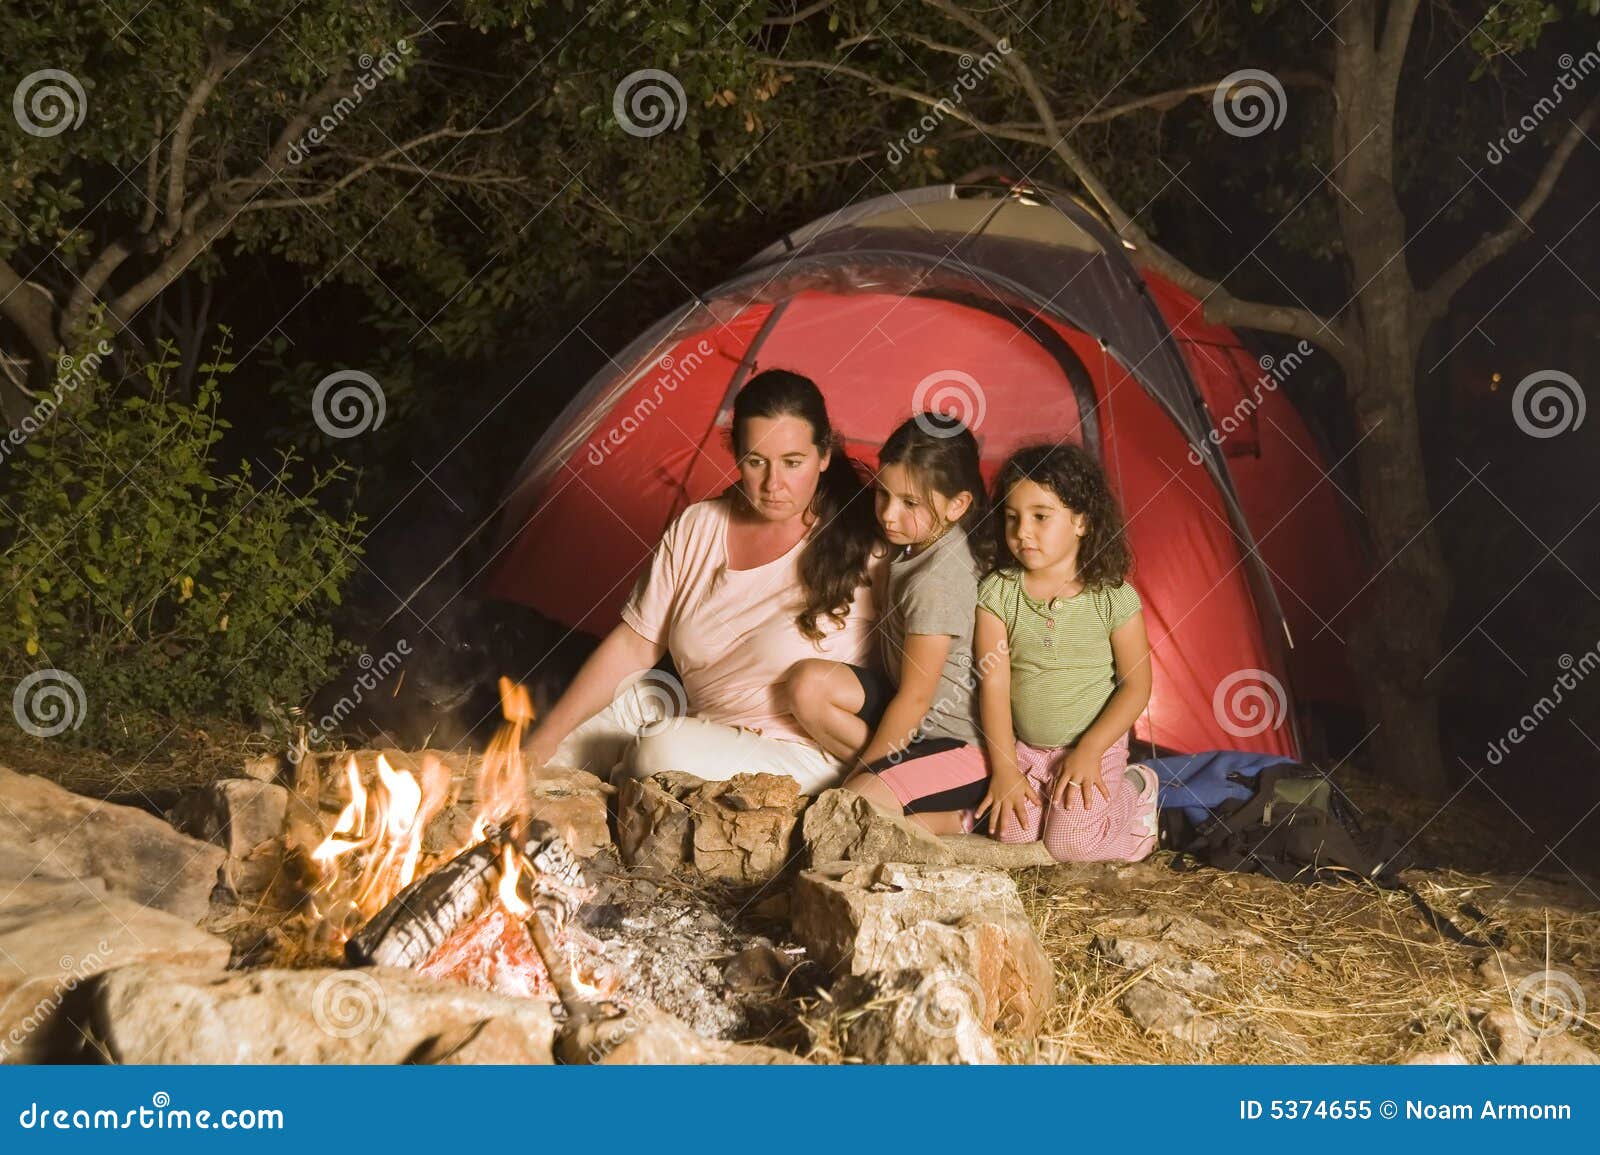 camp travel mom